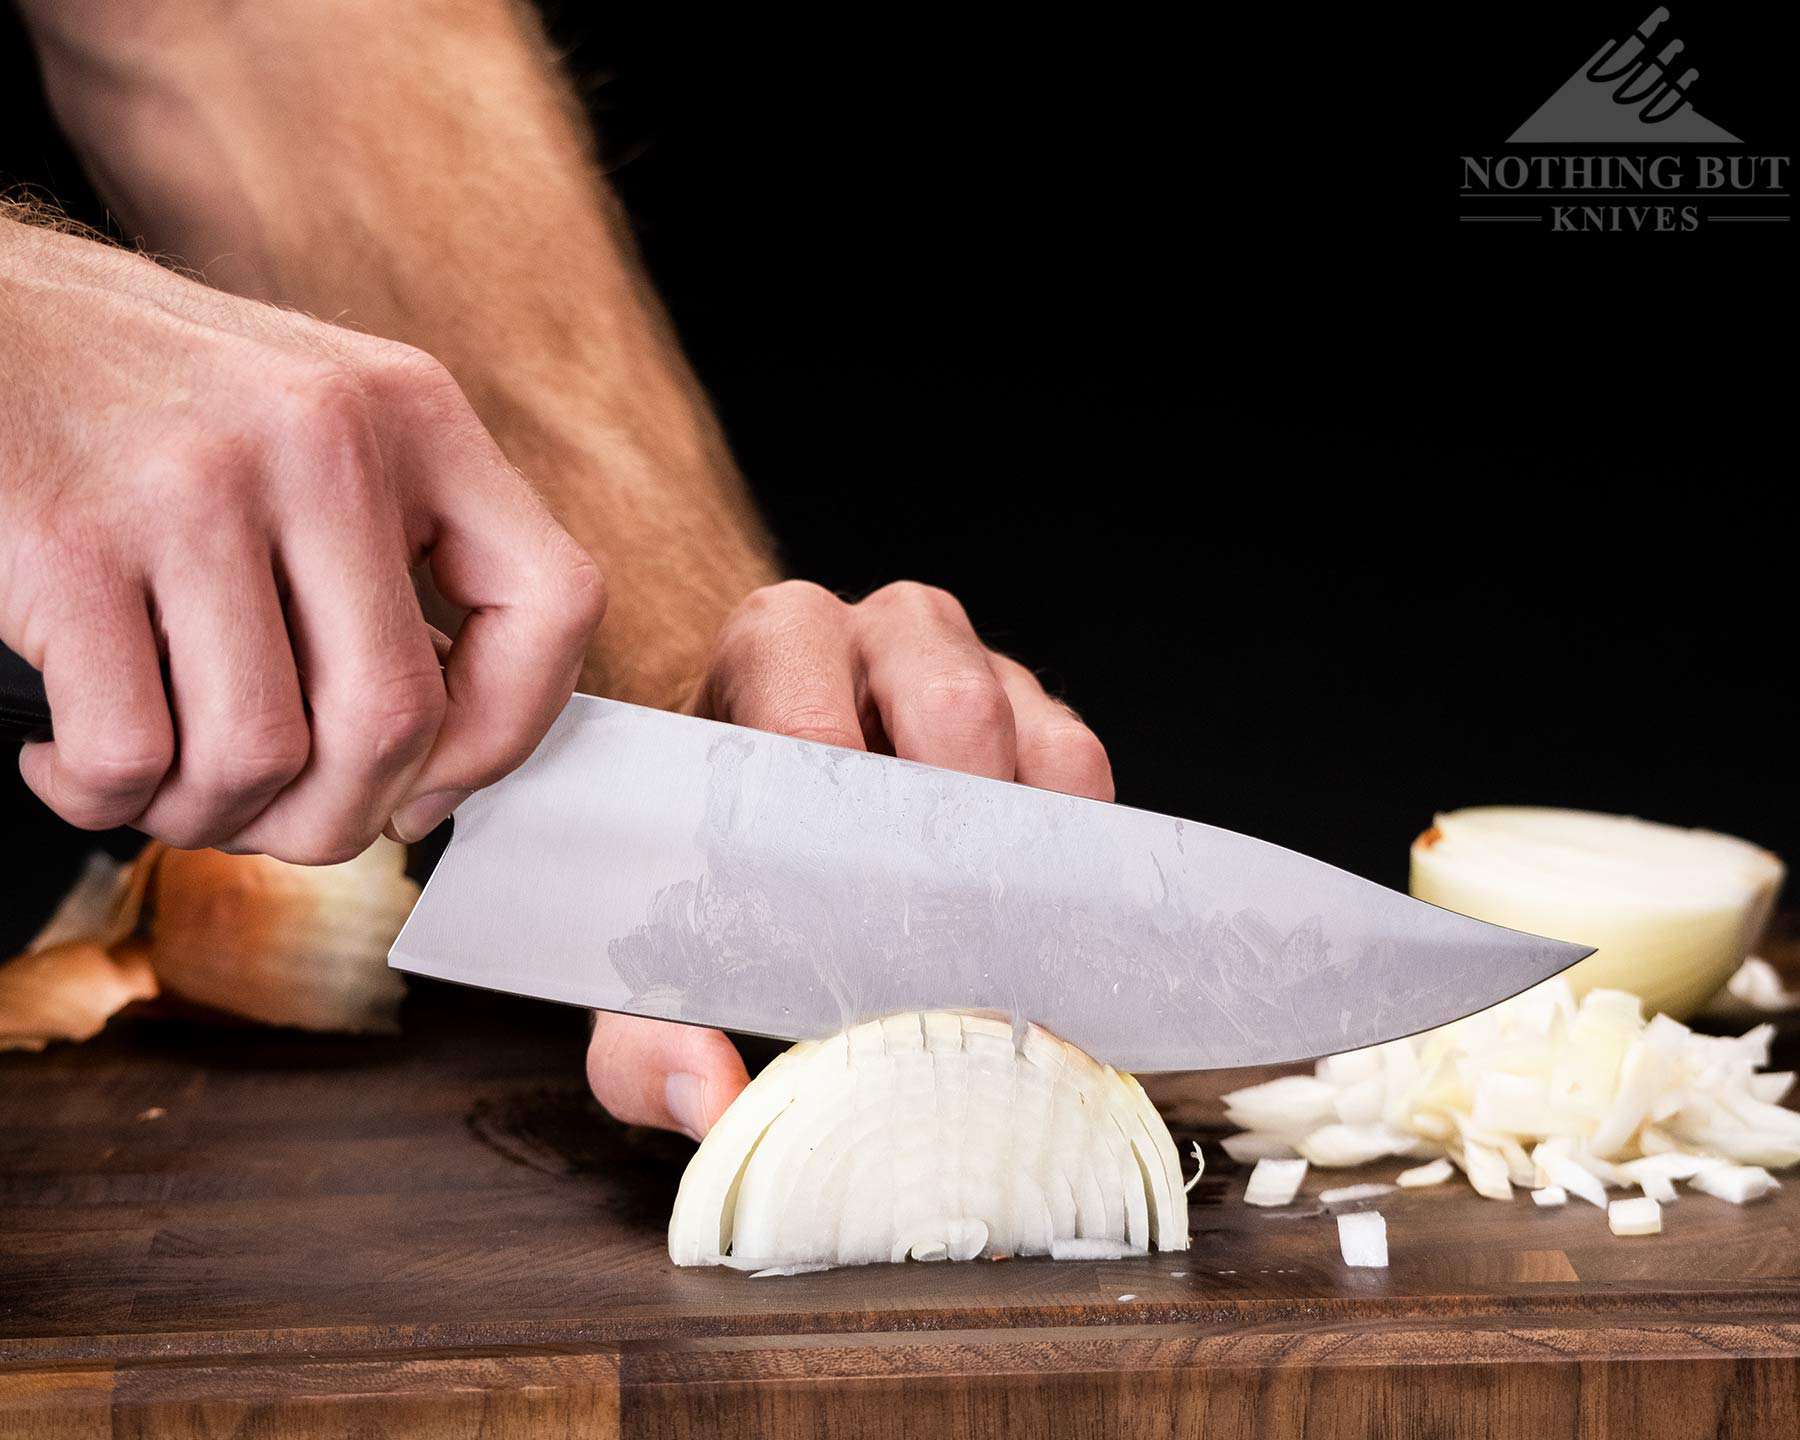 A close-up of the Mattia Borrani chef knife chopping an onion. 